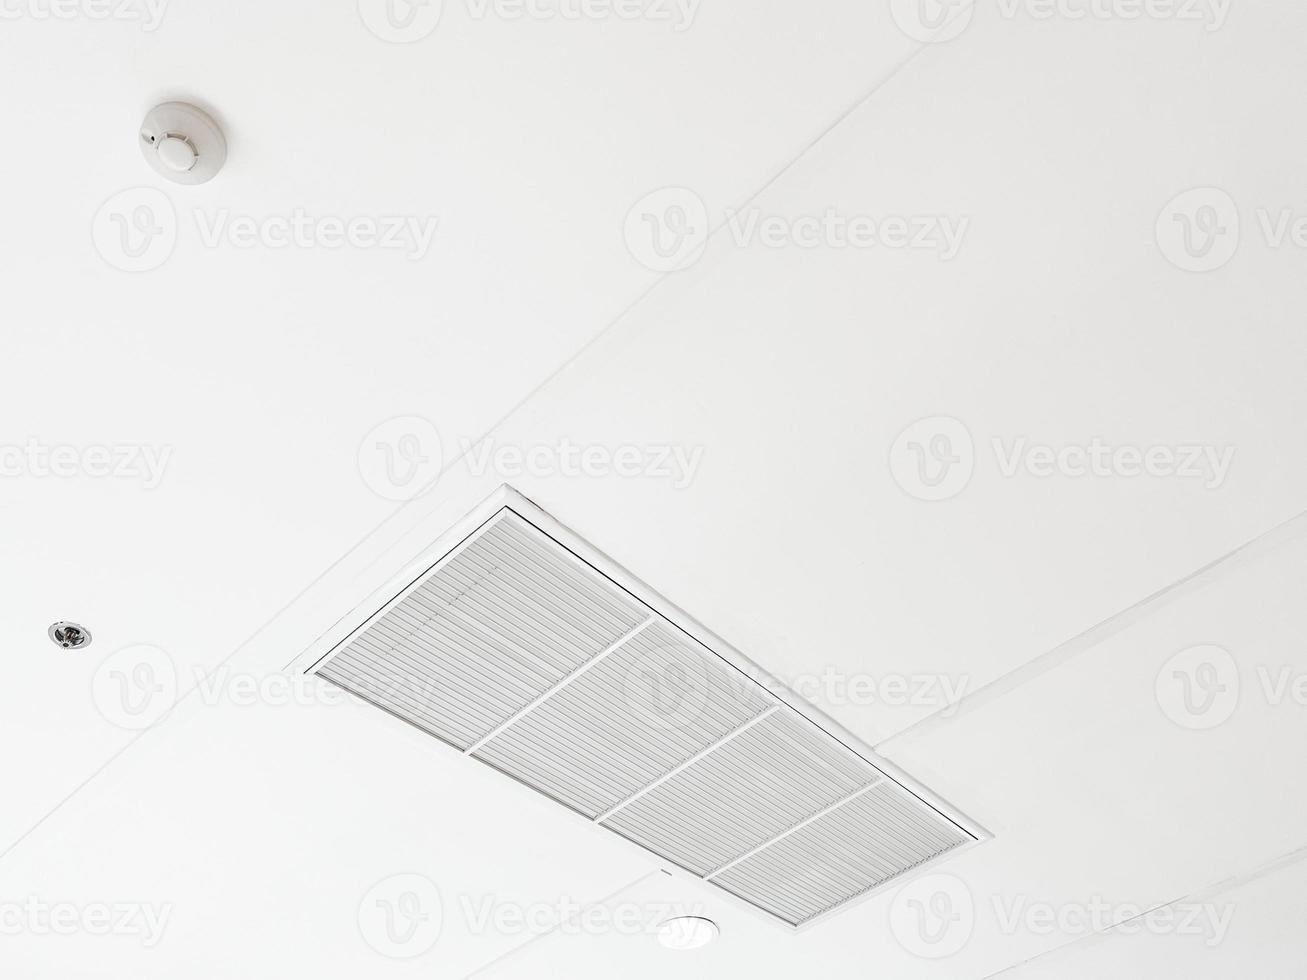 condicionador de ar tipo cassete montado no teto e luz de lâmpada moderna no teto branco. ar condicionado de duto para casa ou escritório foto